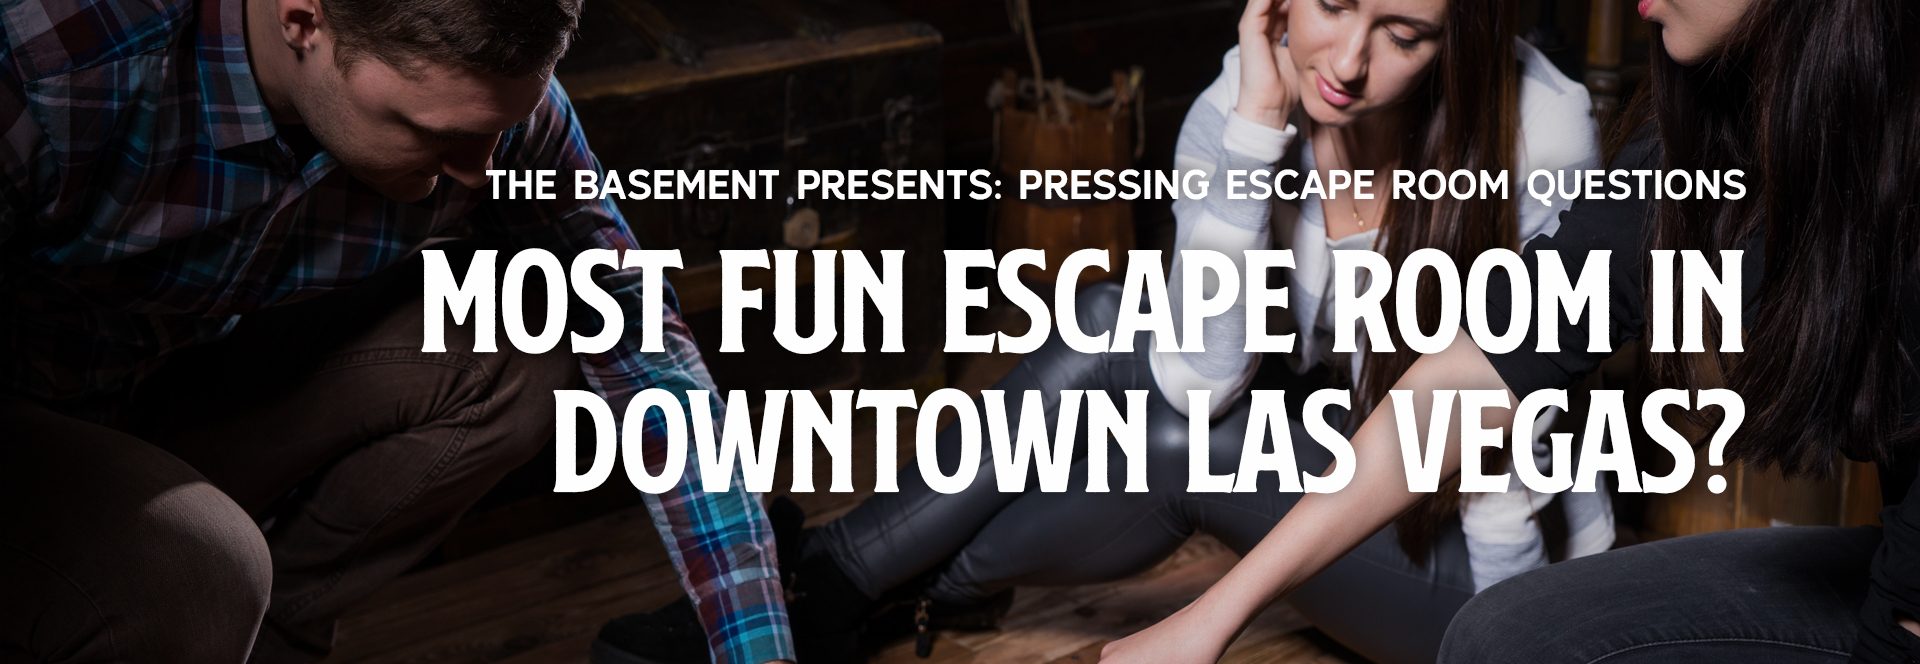 Most Fun Escape Room Downtown Las Vegas